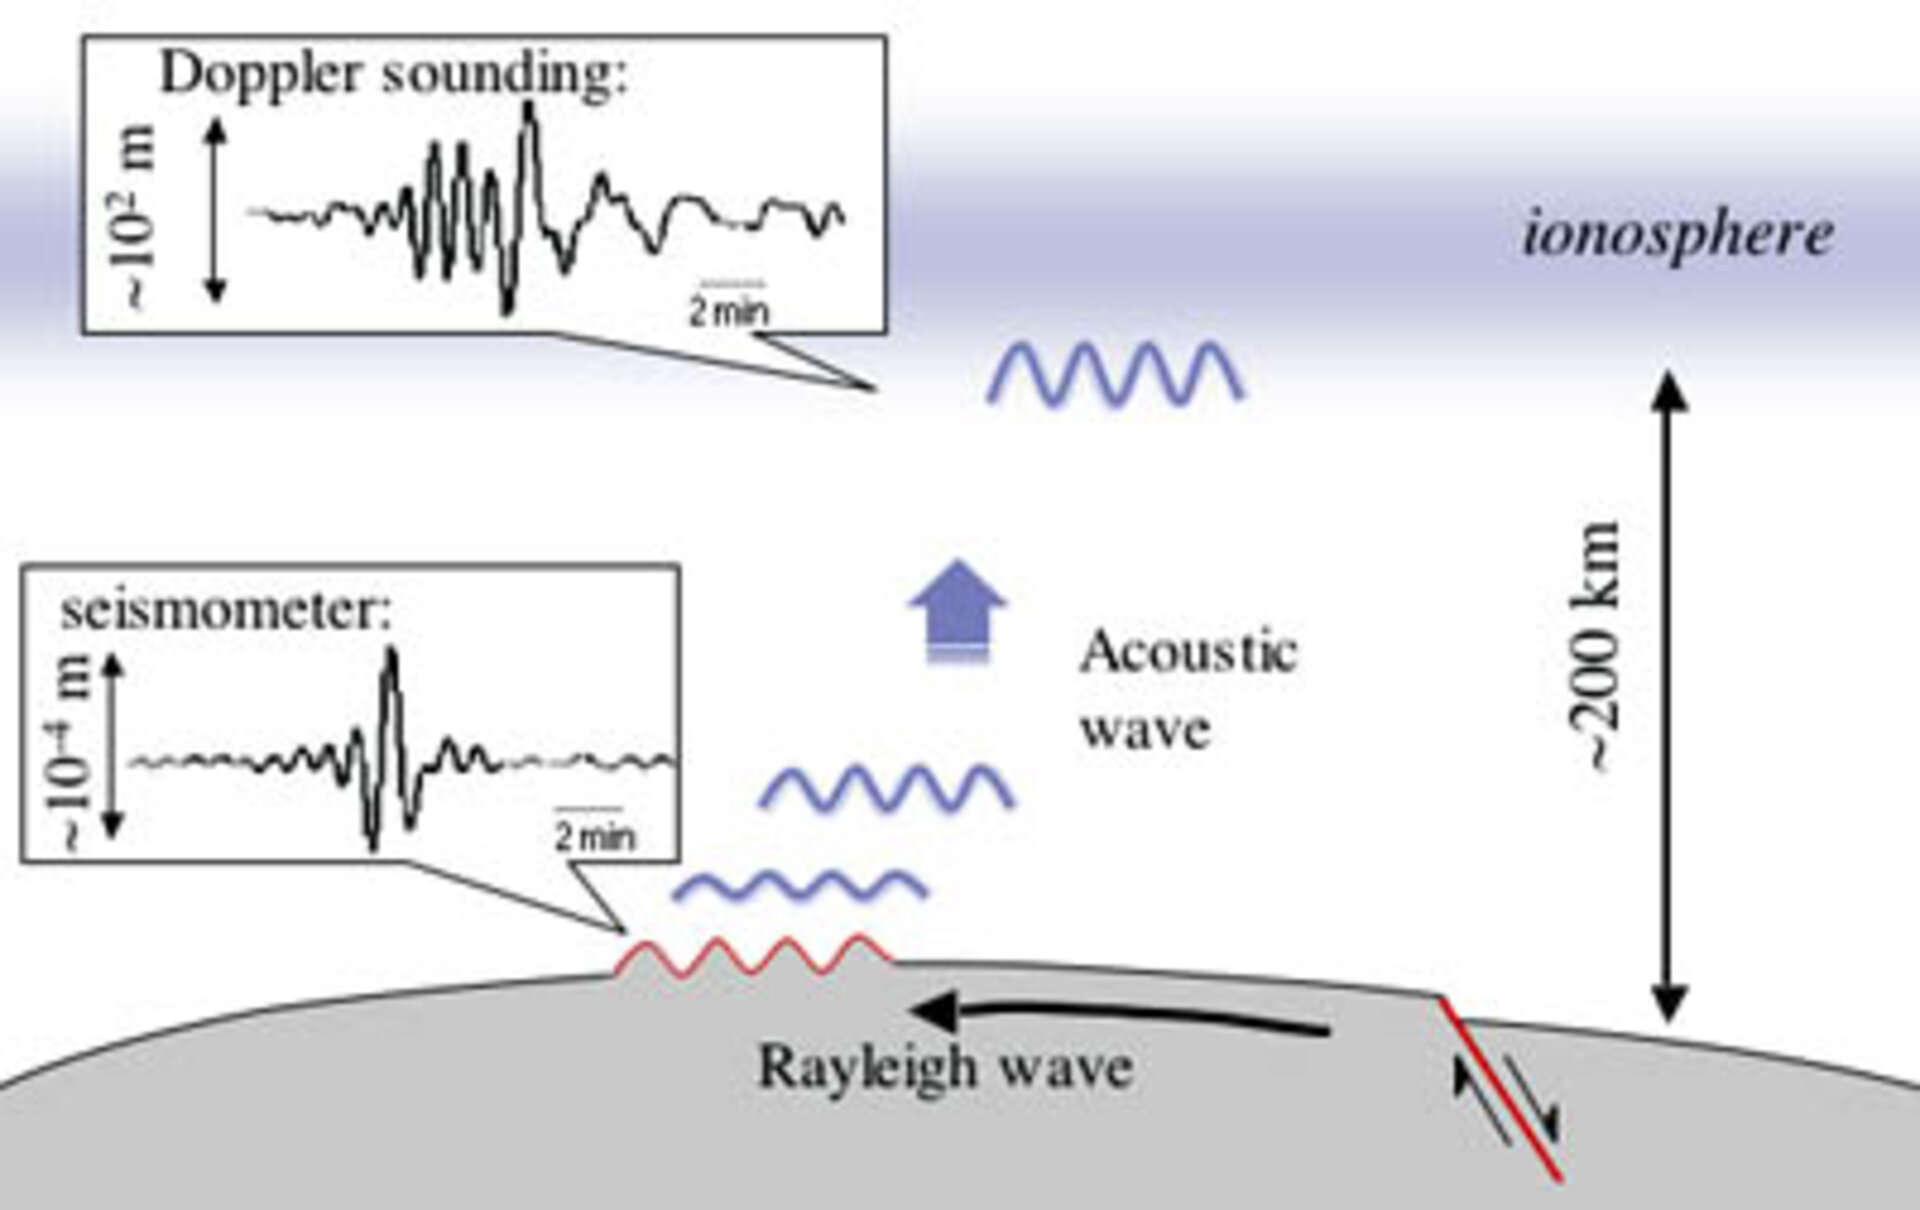 Earthquakes create acoustic waves, perturbing the ionosphere